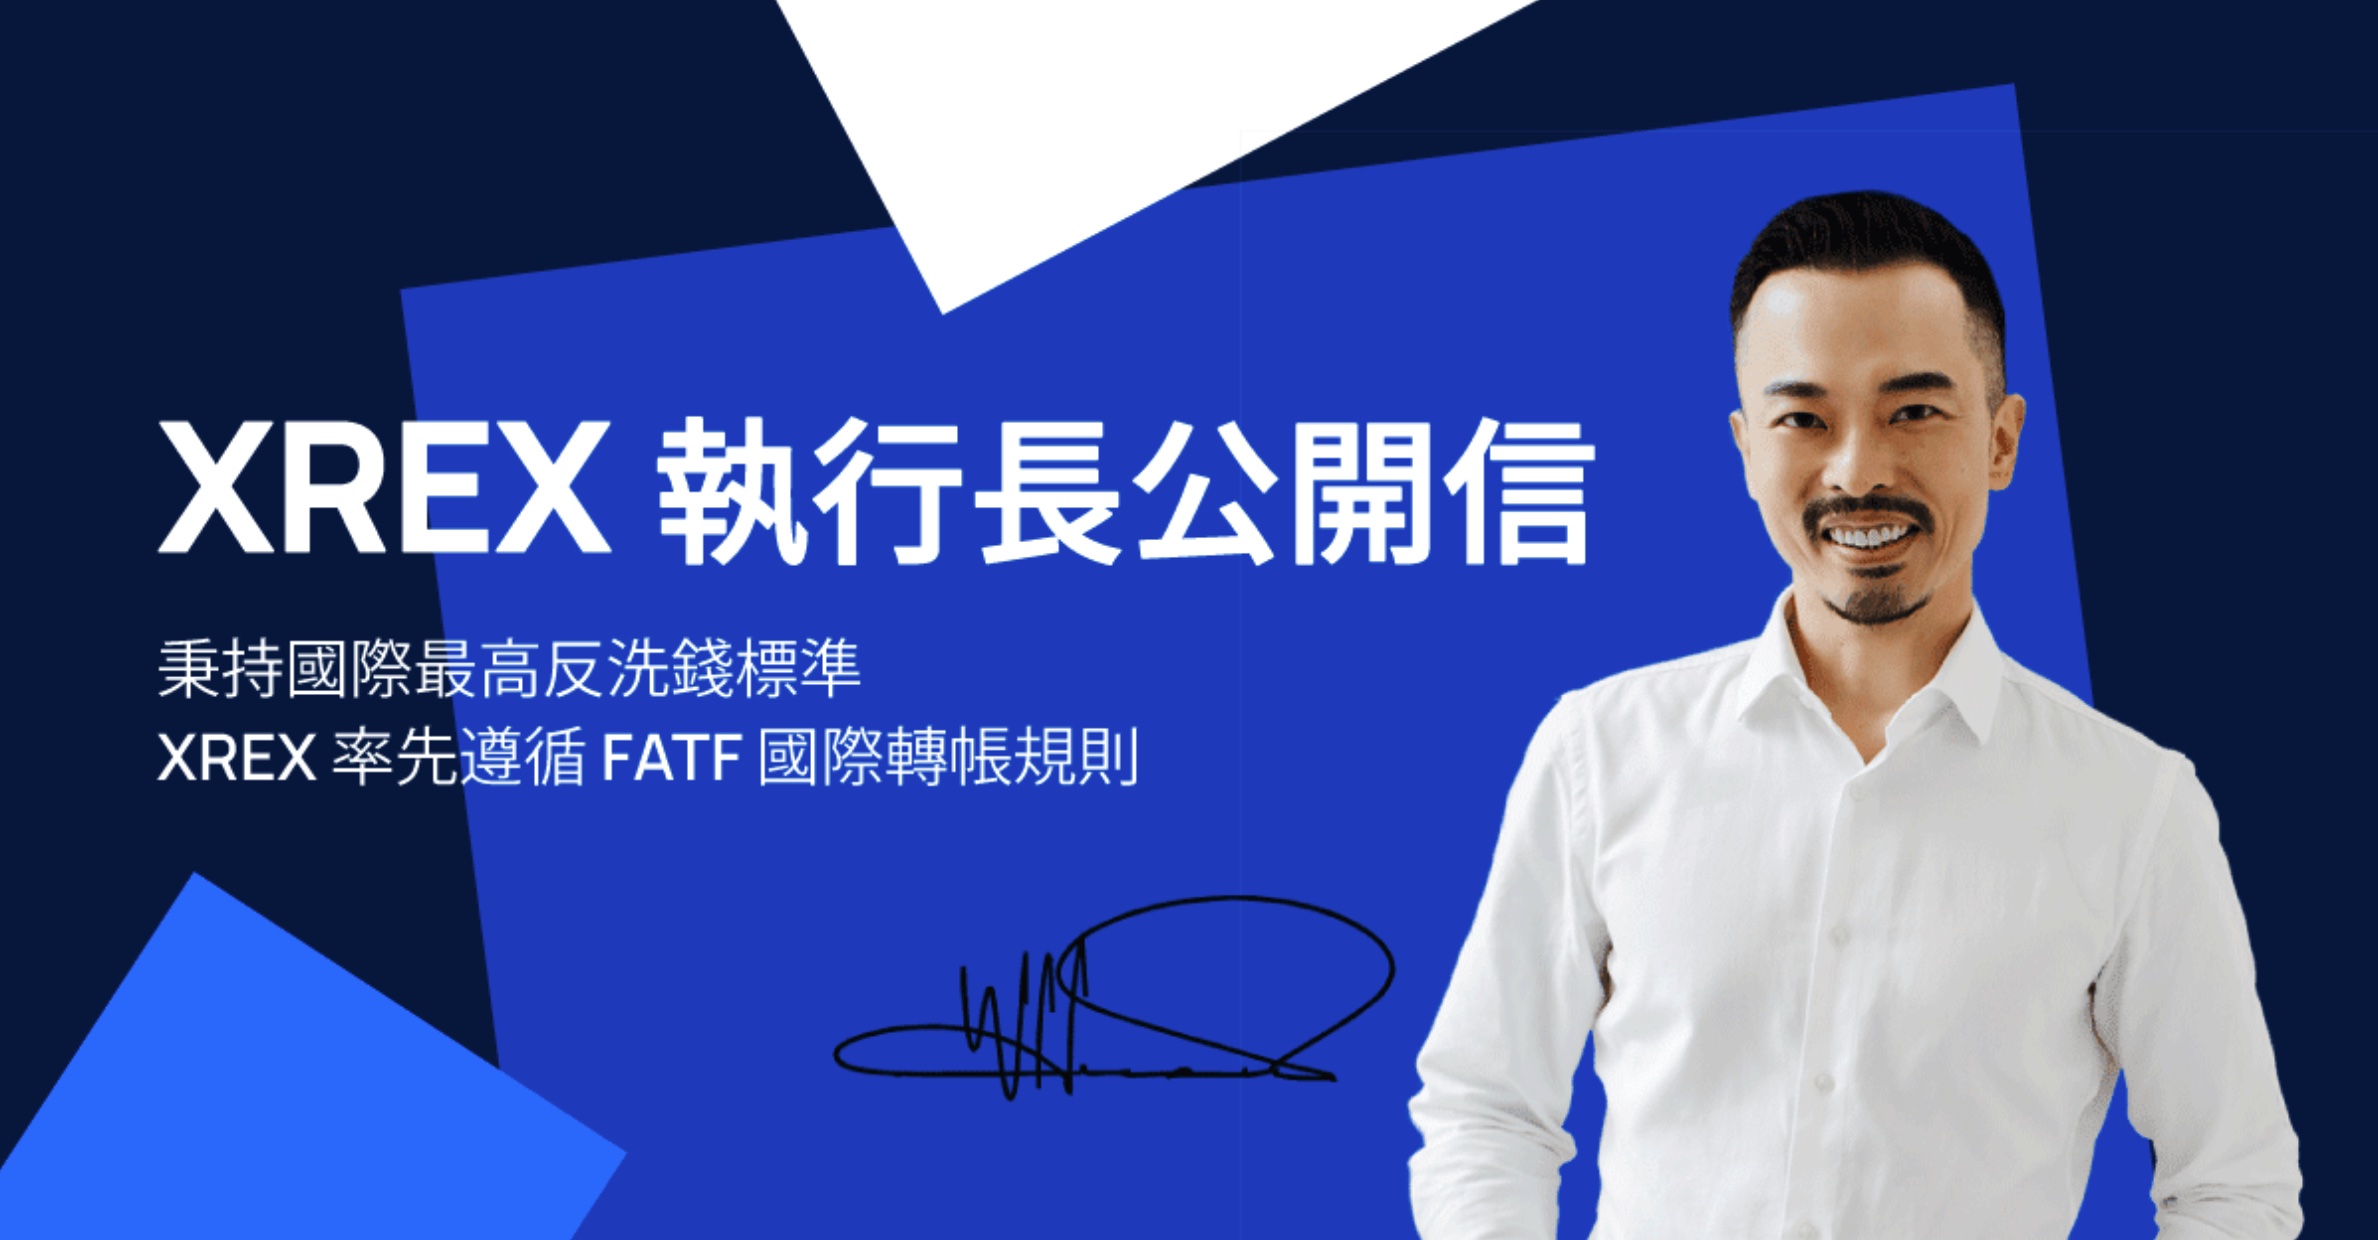 XREX 執行長黃耀文發表「承諾合規」公開信：秉持 FATF 反洗錢標準，致力提供普惠金融